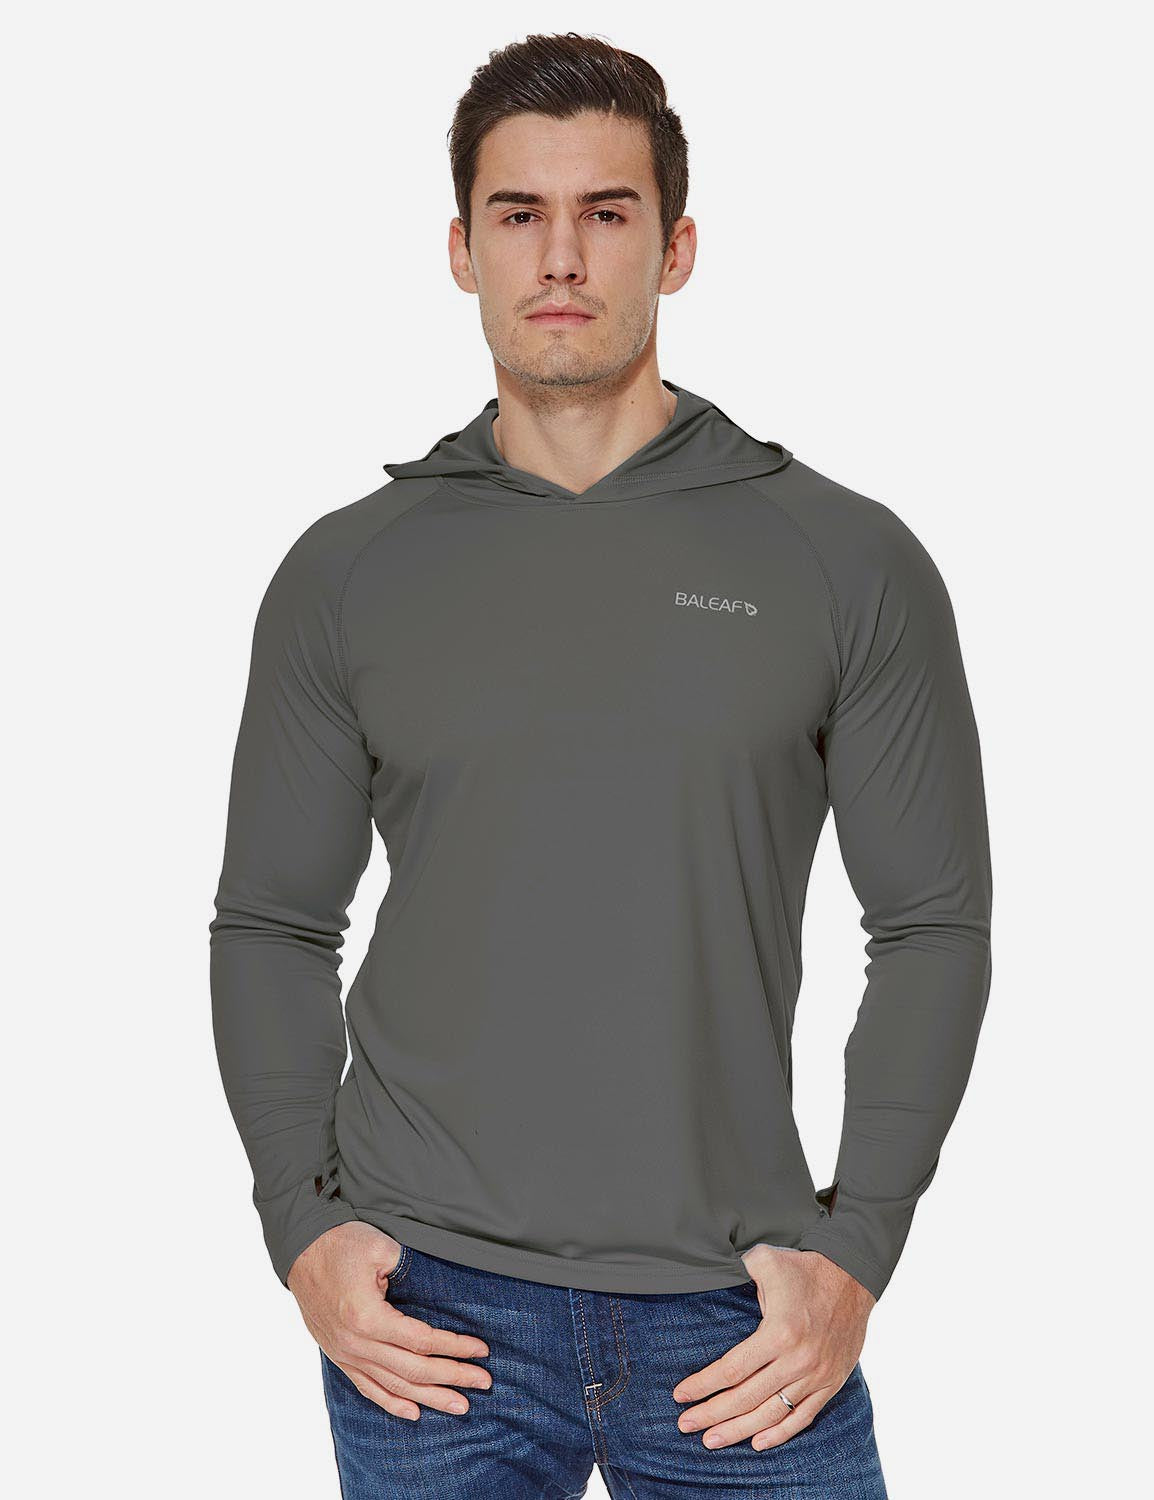 Baleaf Men's UPF50+ Hooded & Thumbhole Comfort Fit Long Sleeved Shirt aga030 Deep Gray Front